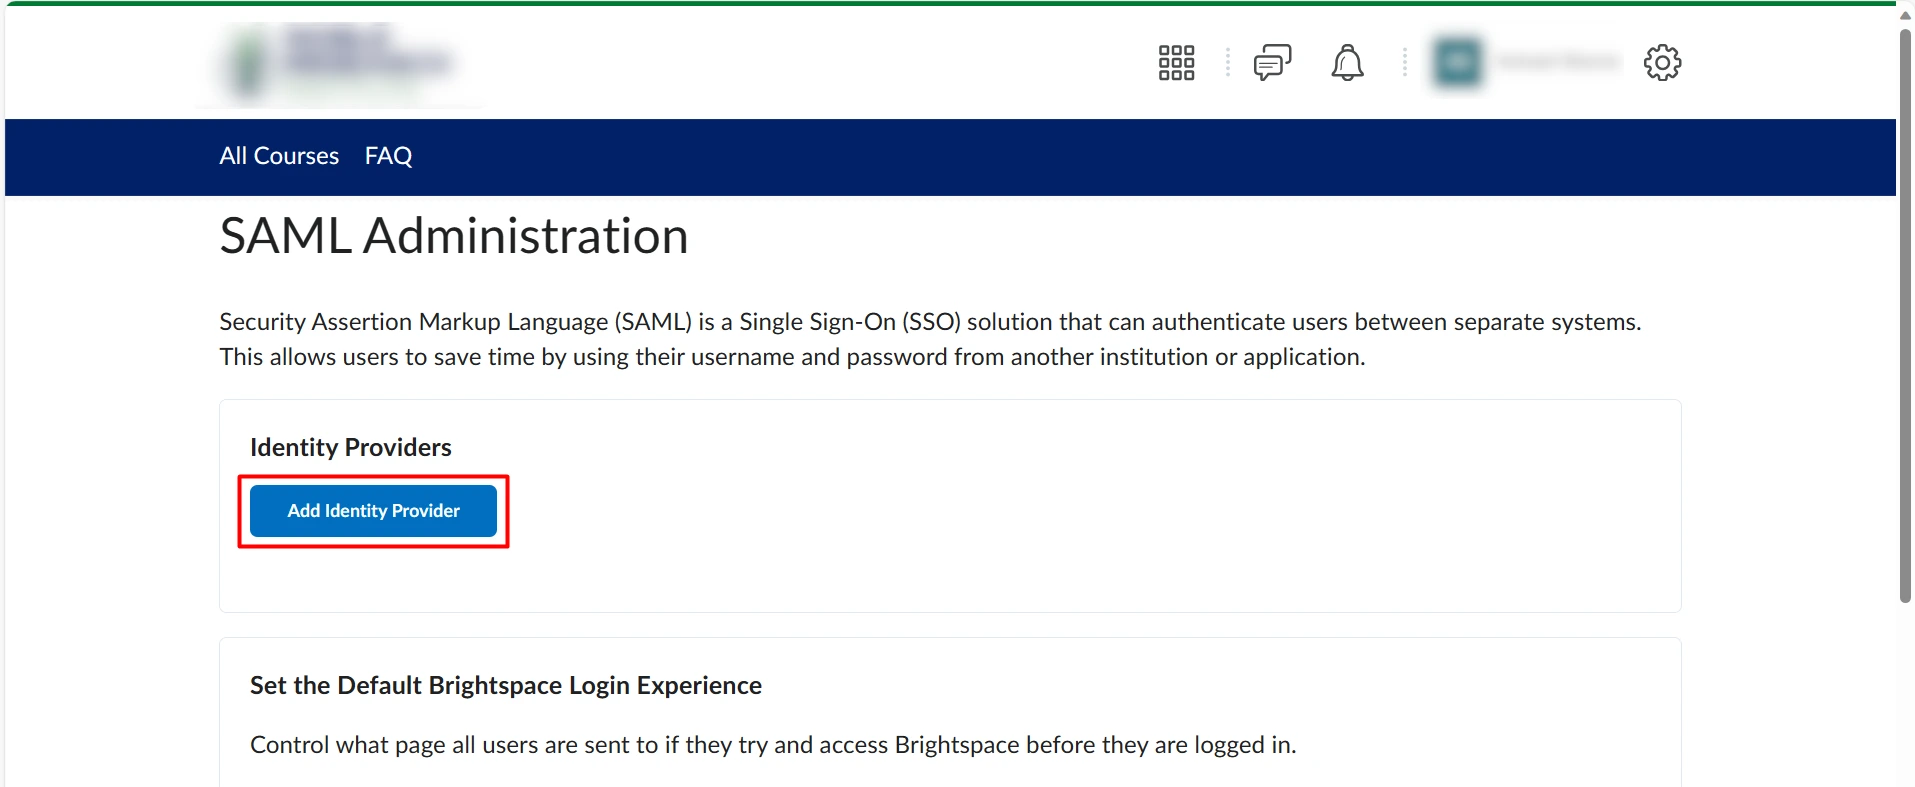 miniOrange Brightspace SSO using Shopify as IDP - Click on Add New Identity Provider